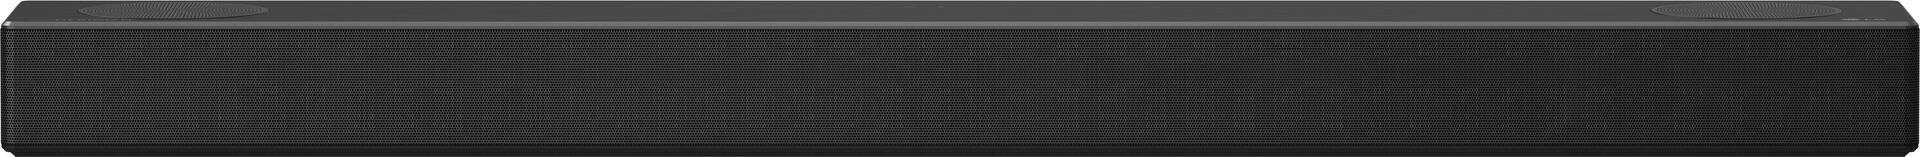 LG SN7CY Soundbar für Heimkino (SN7CY.DEUSLLK)